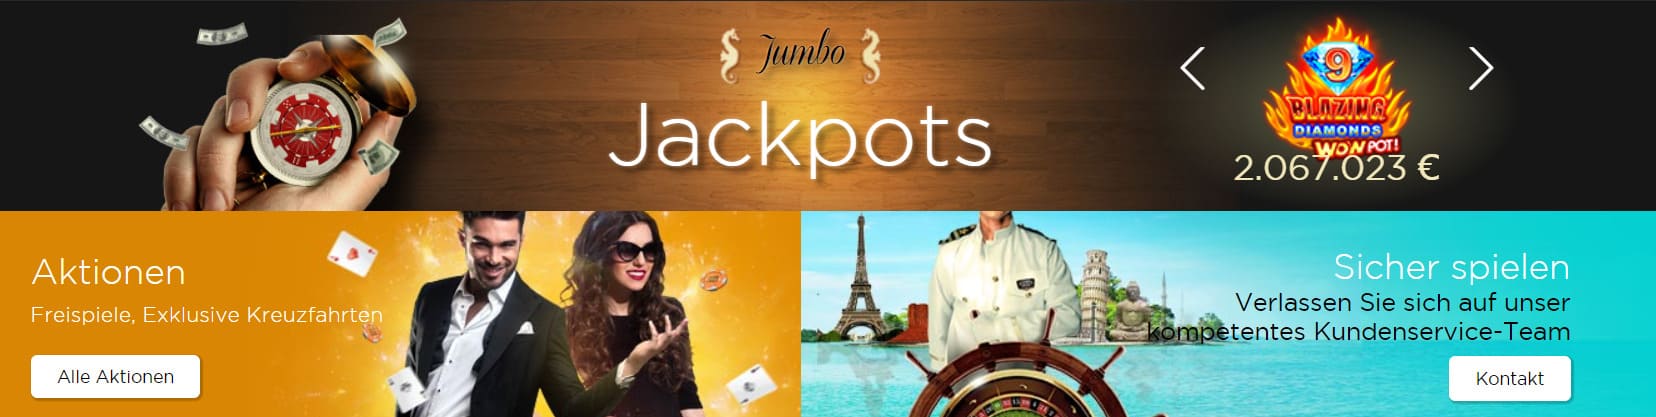 casino cruise jackpots